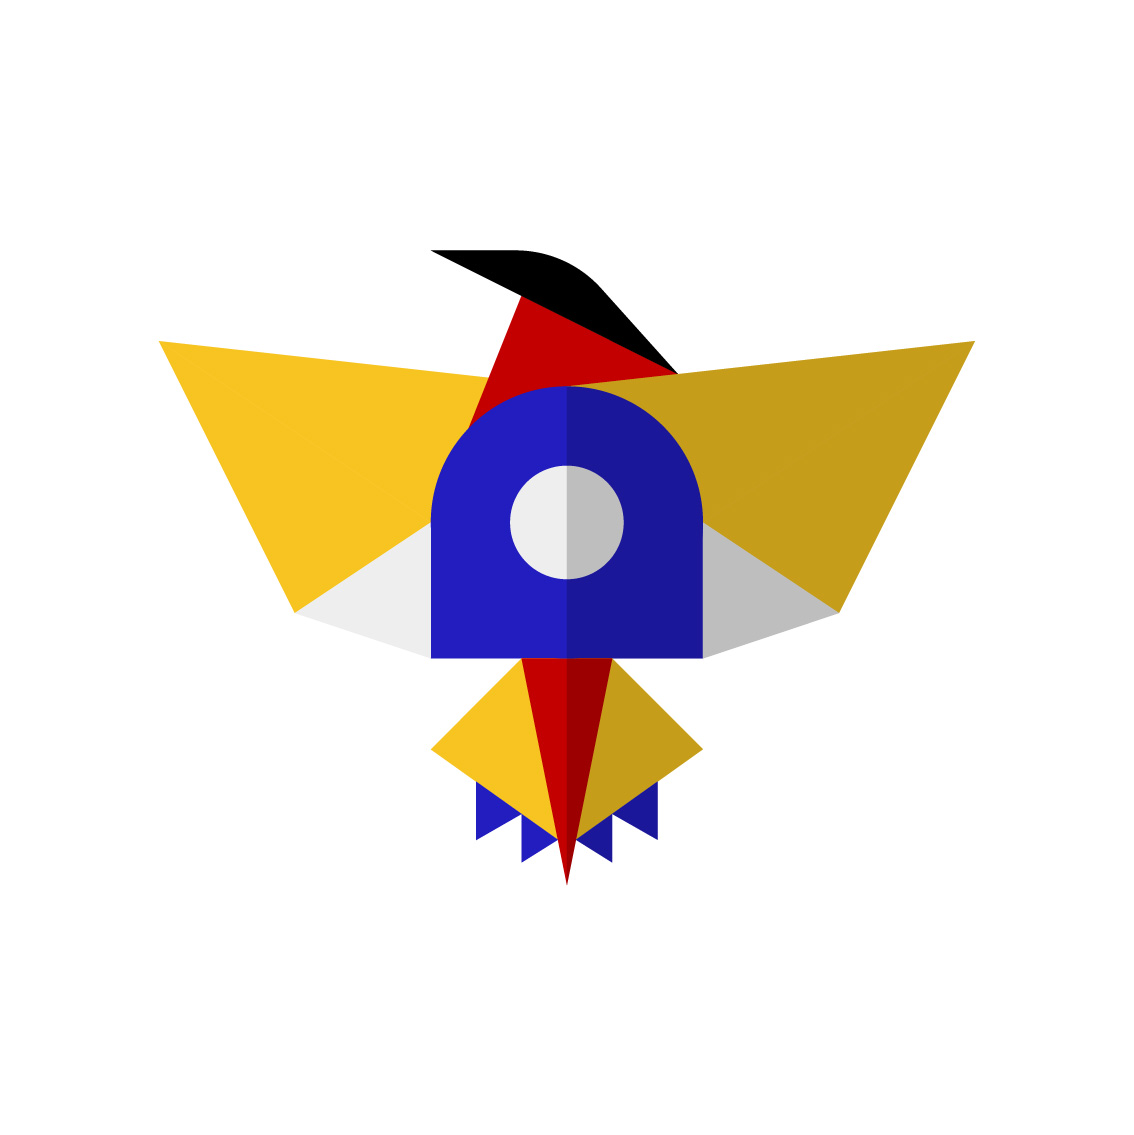 Markut Rekli İkon Logosu, JPG Formatında